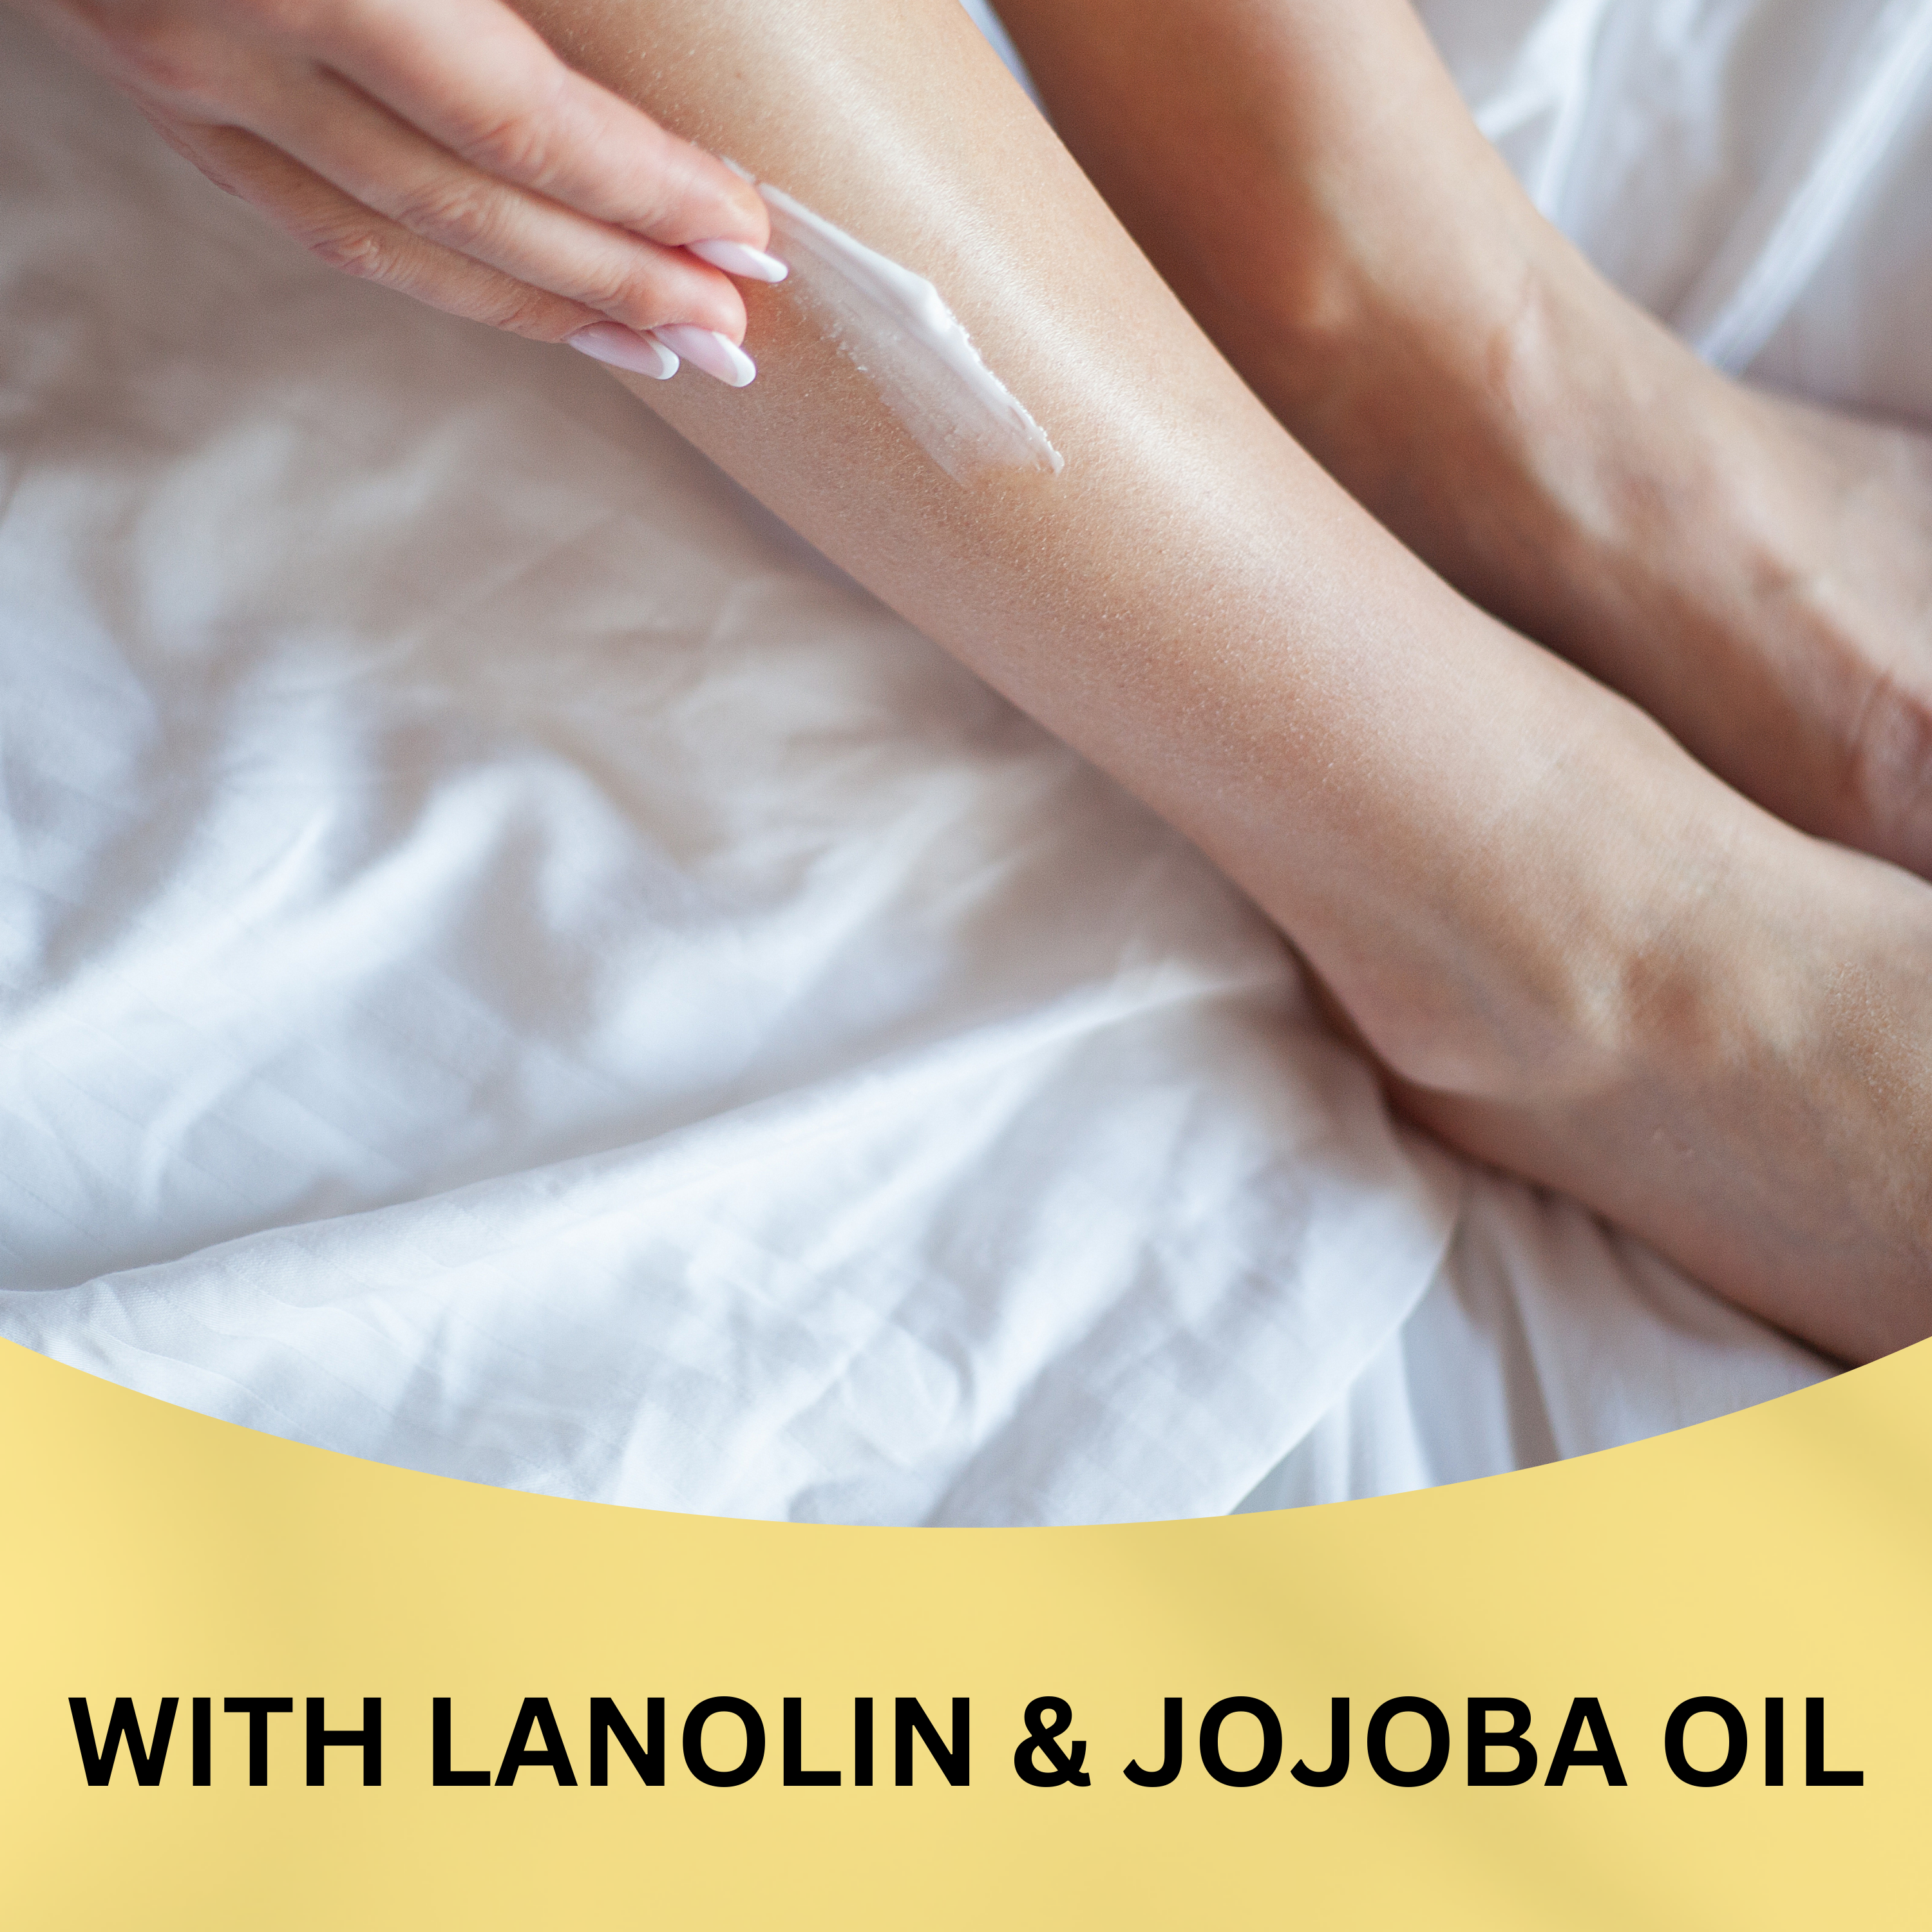 Black Canyon Bergamot & Mandarin Scented Luxury Body Lotion with Lanolin and Jojoba Oil